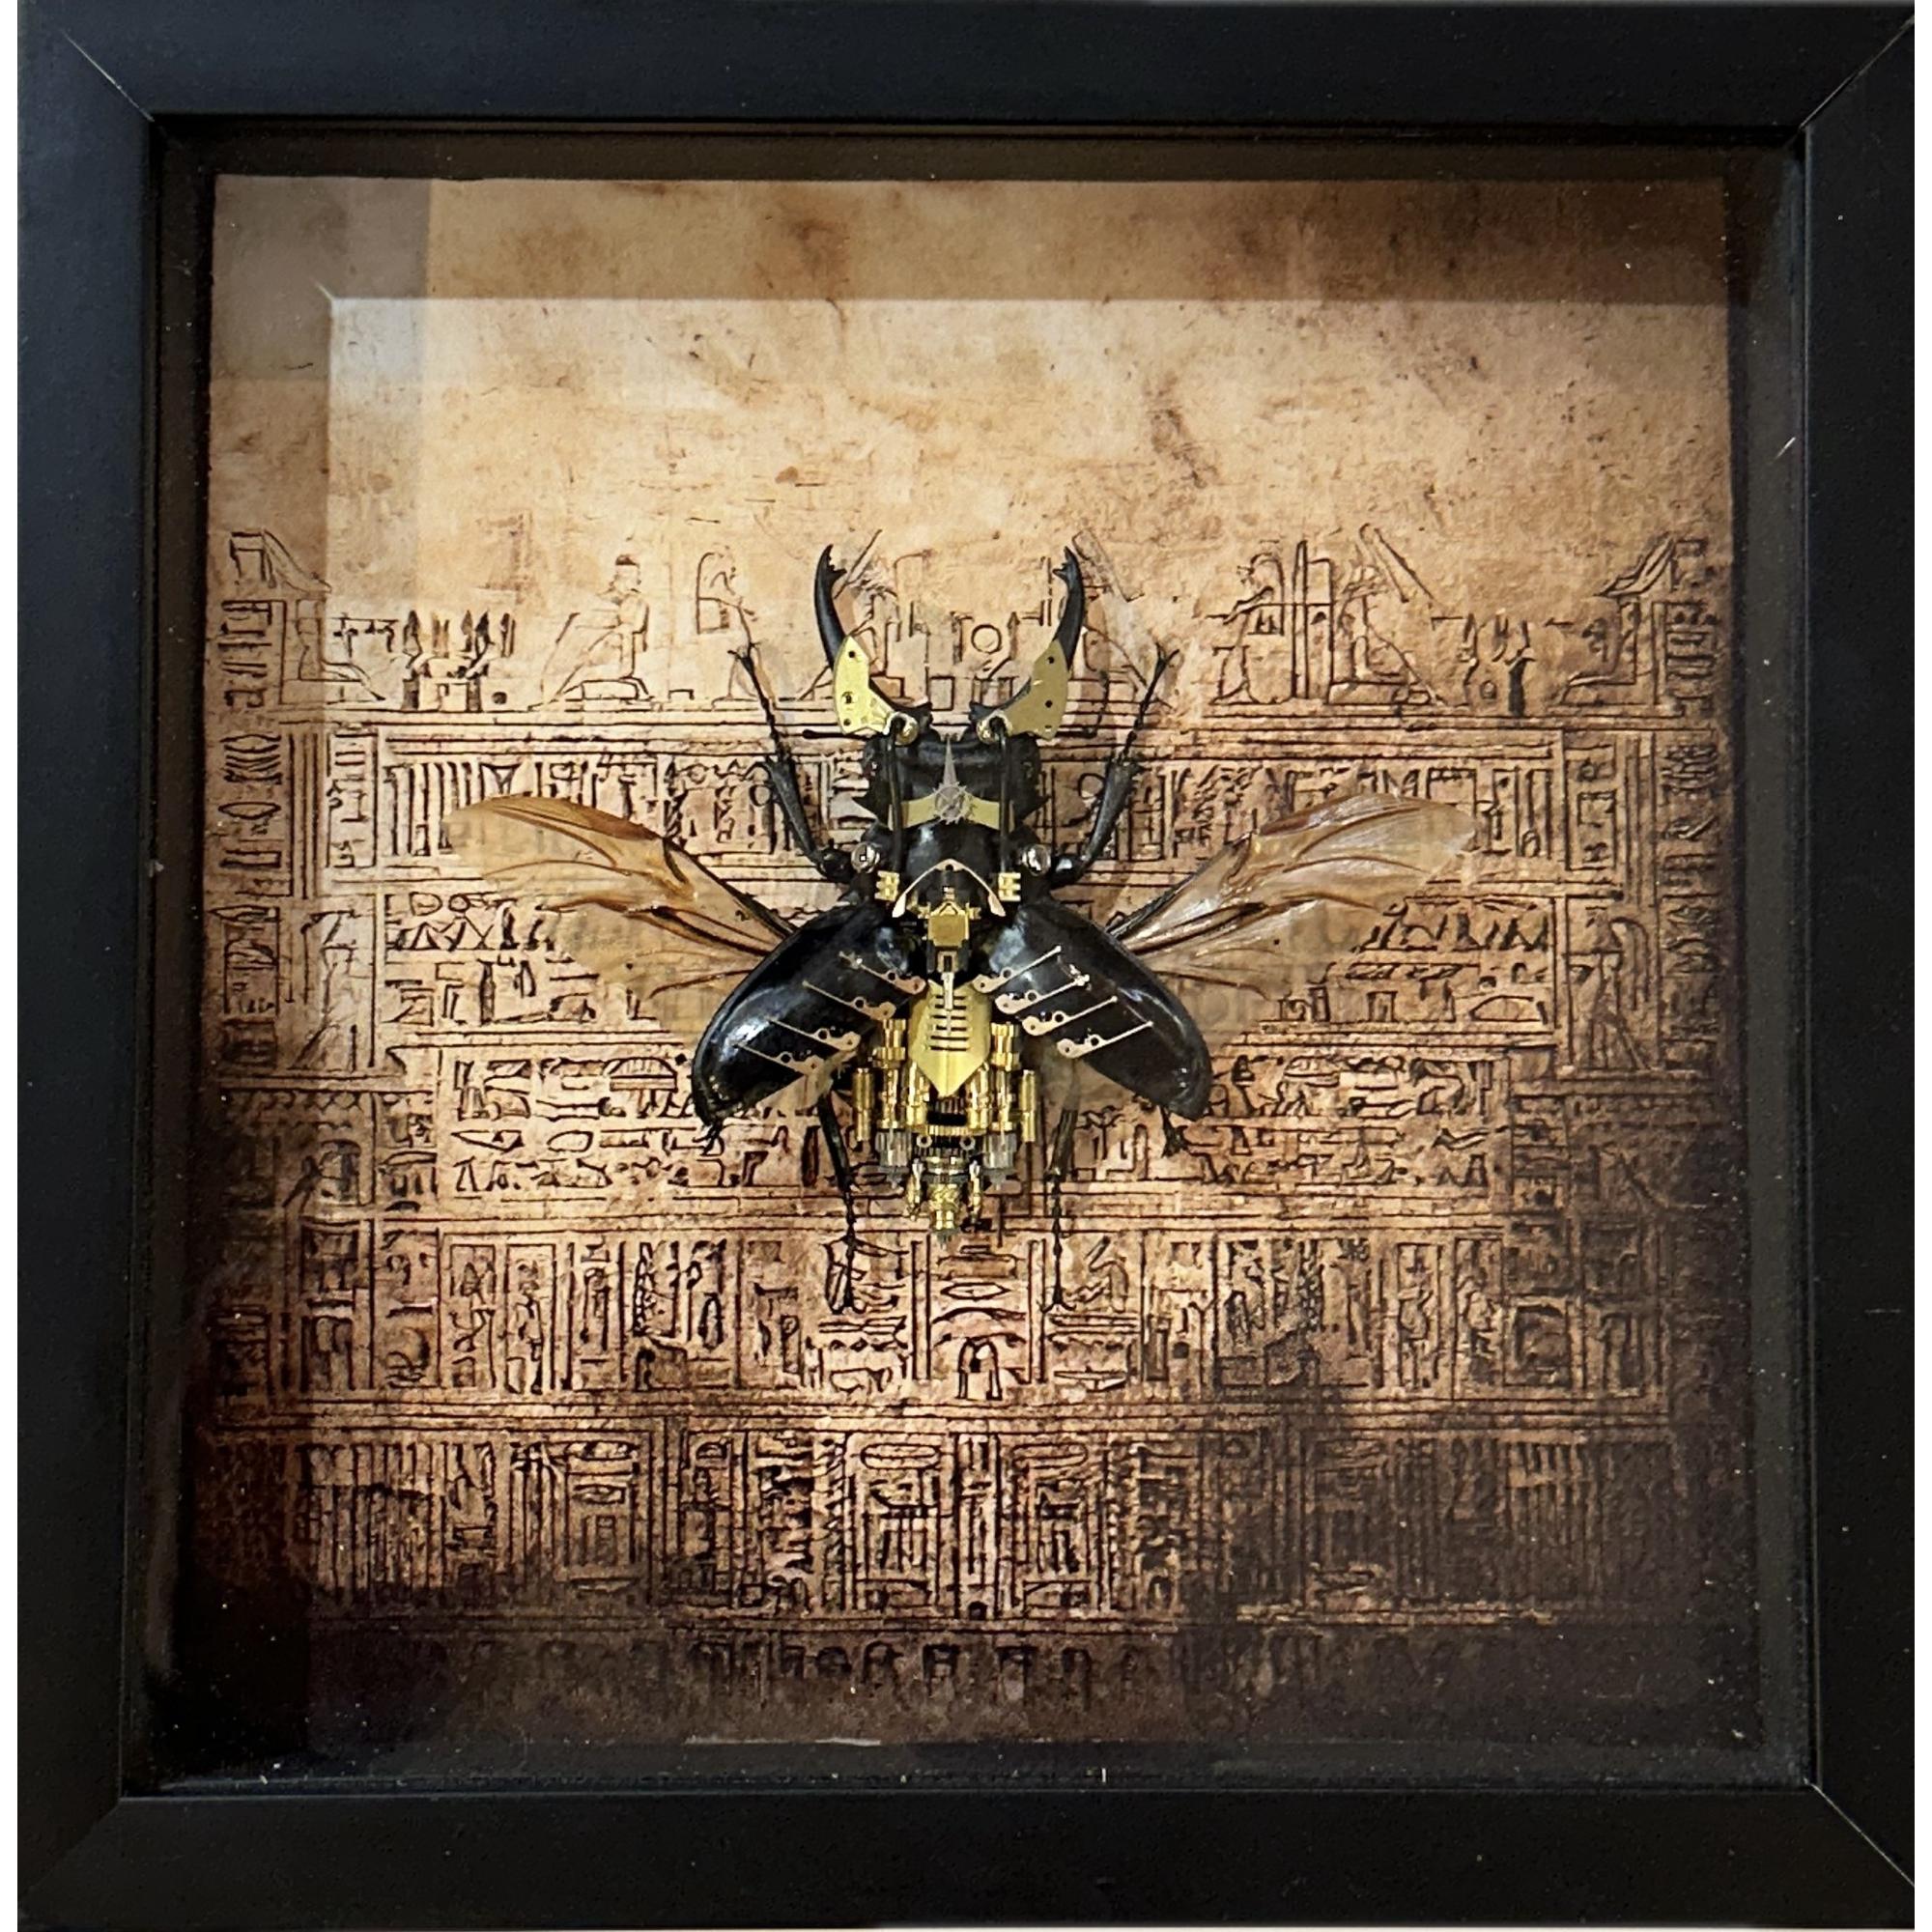 Steampunk Beetle, Egyptian Hieroglyph Prehistoric Online